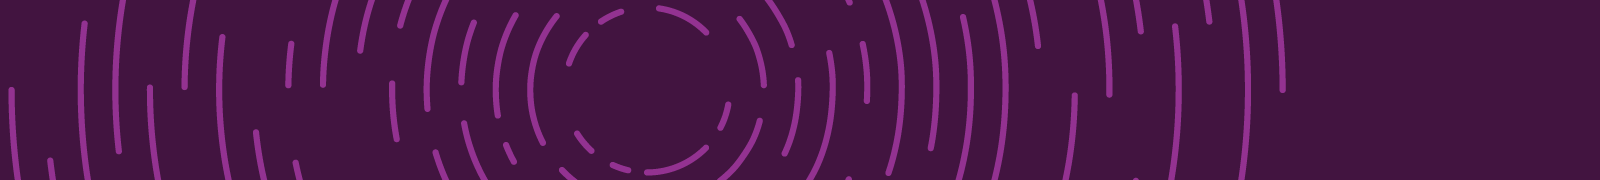 header purple circles